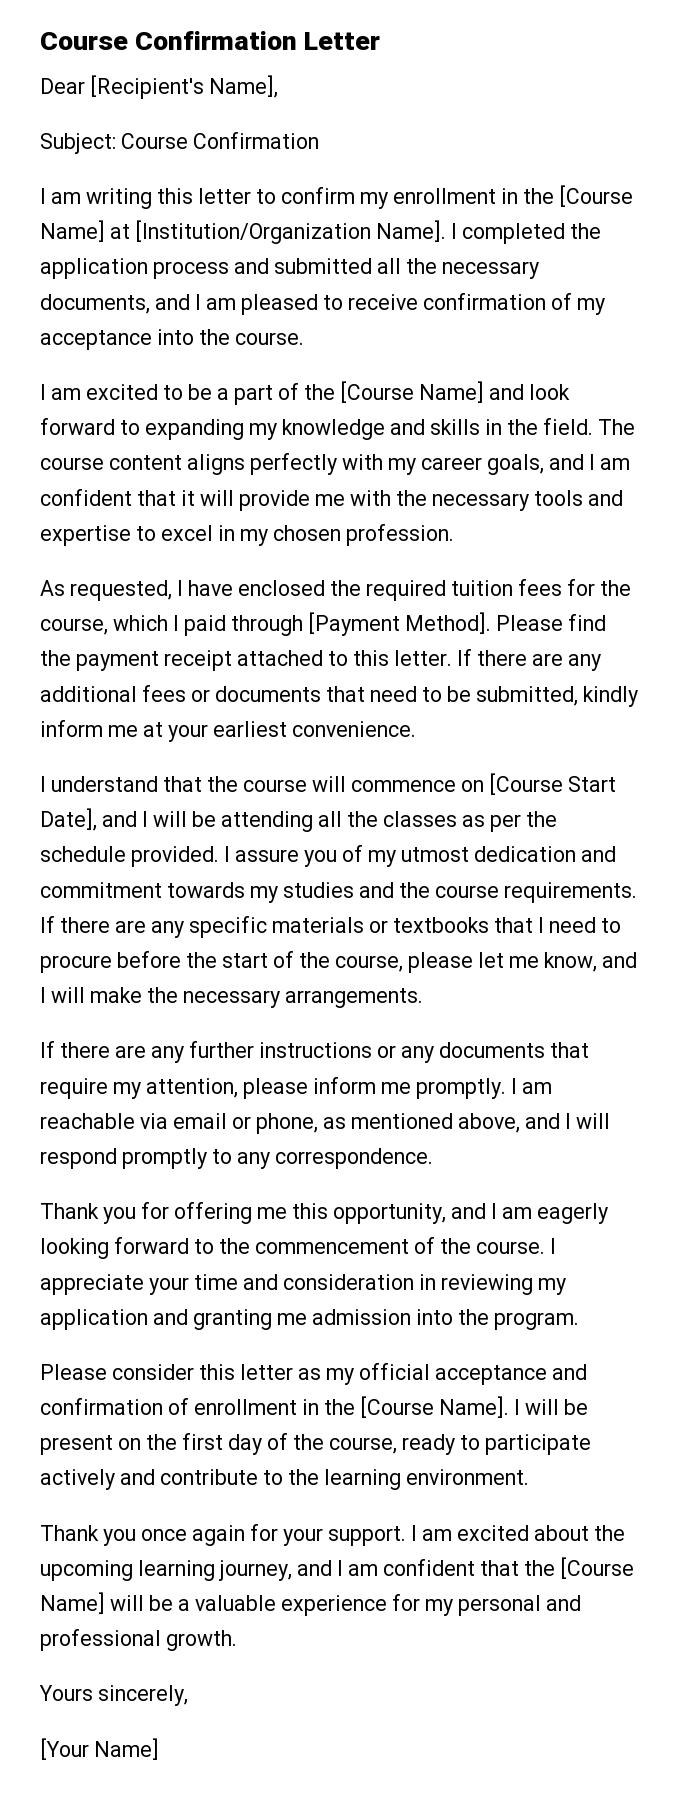 Course Confirmation Letter